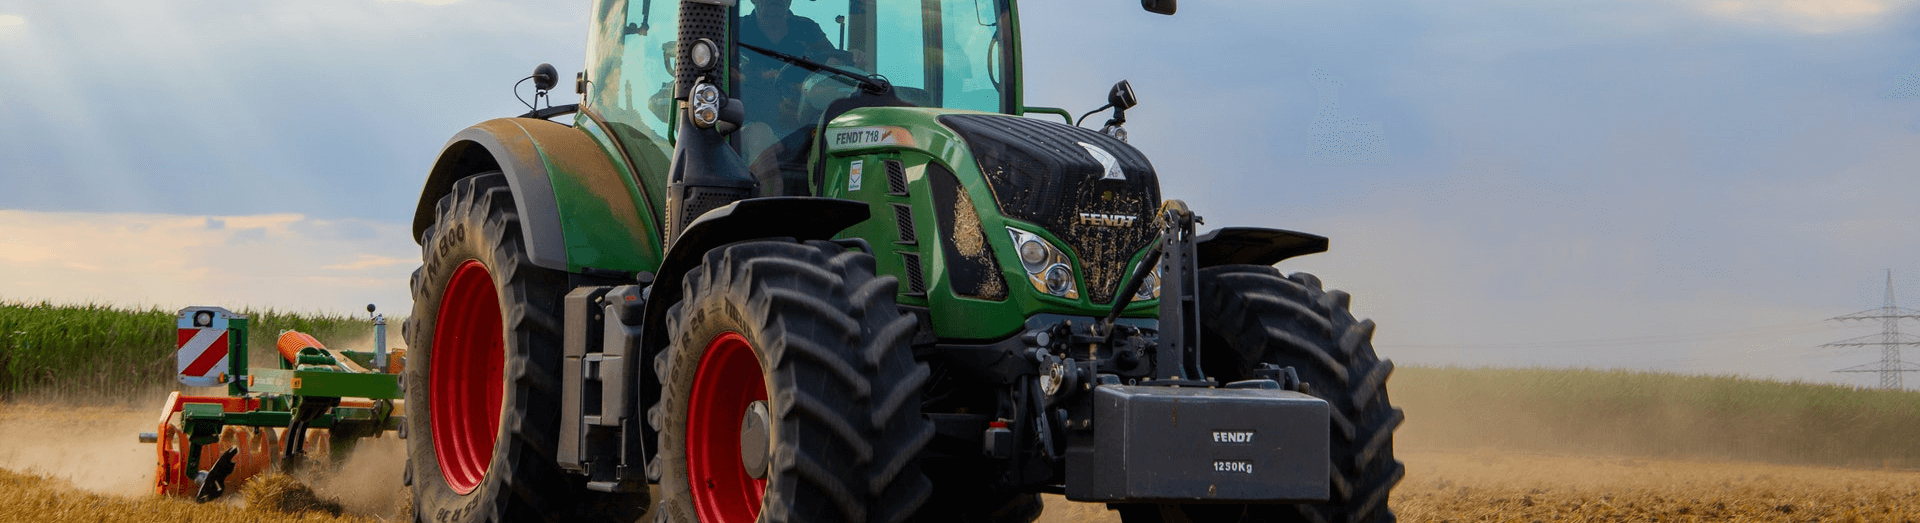 WVT Agri - banner met tractor